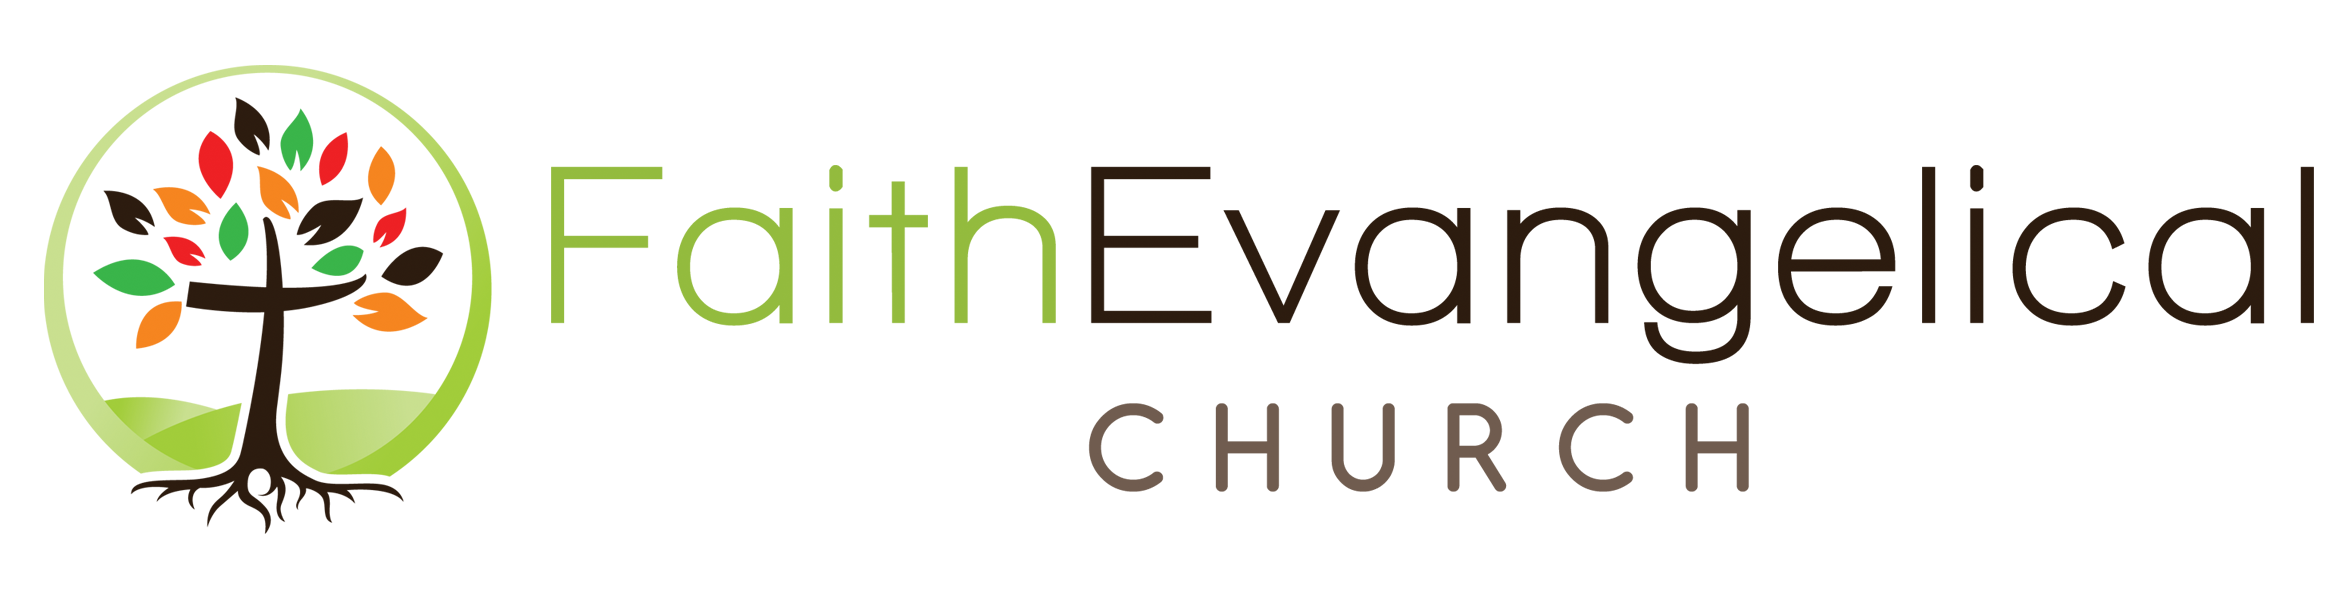 Faith Evangelical Church